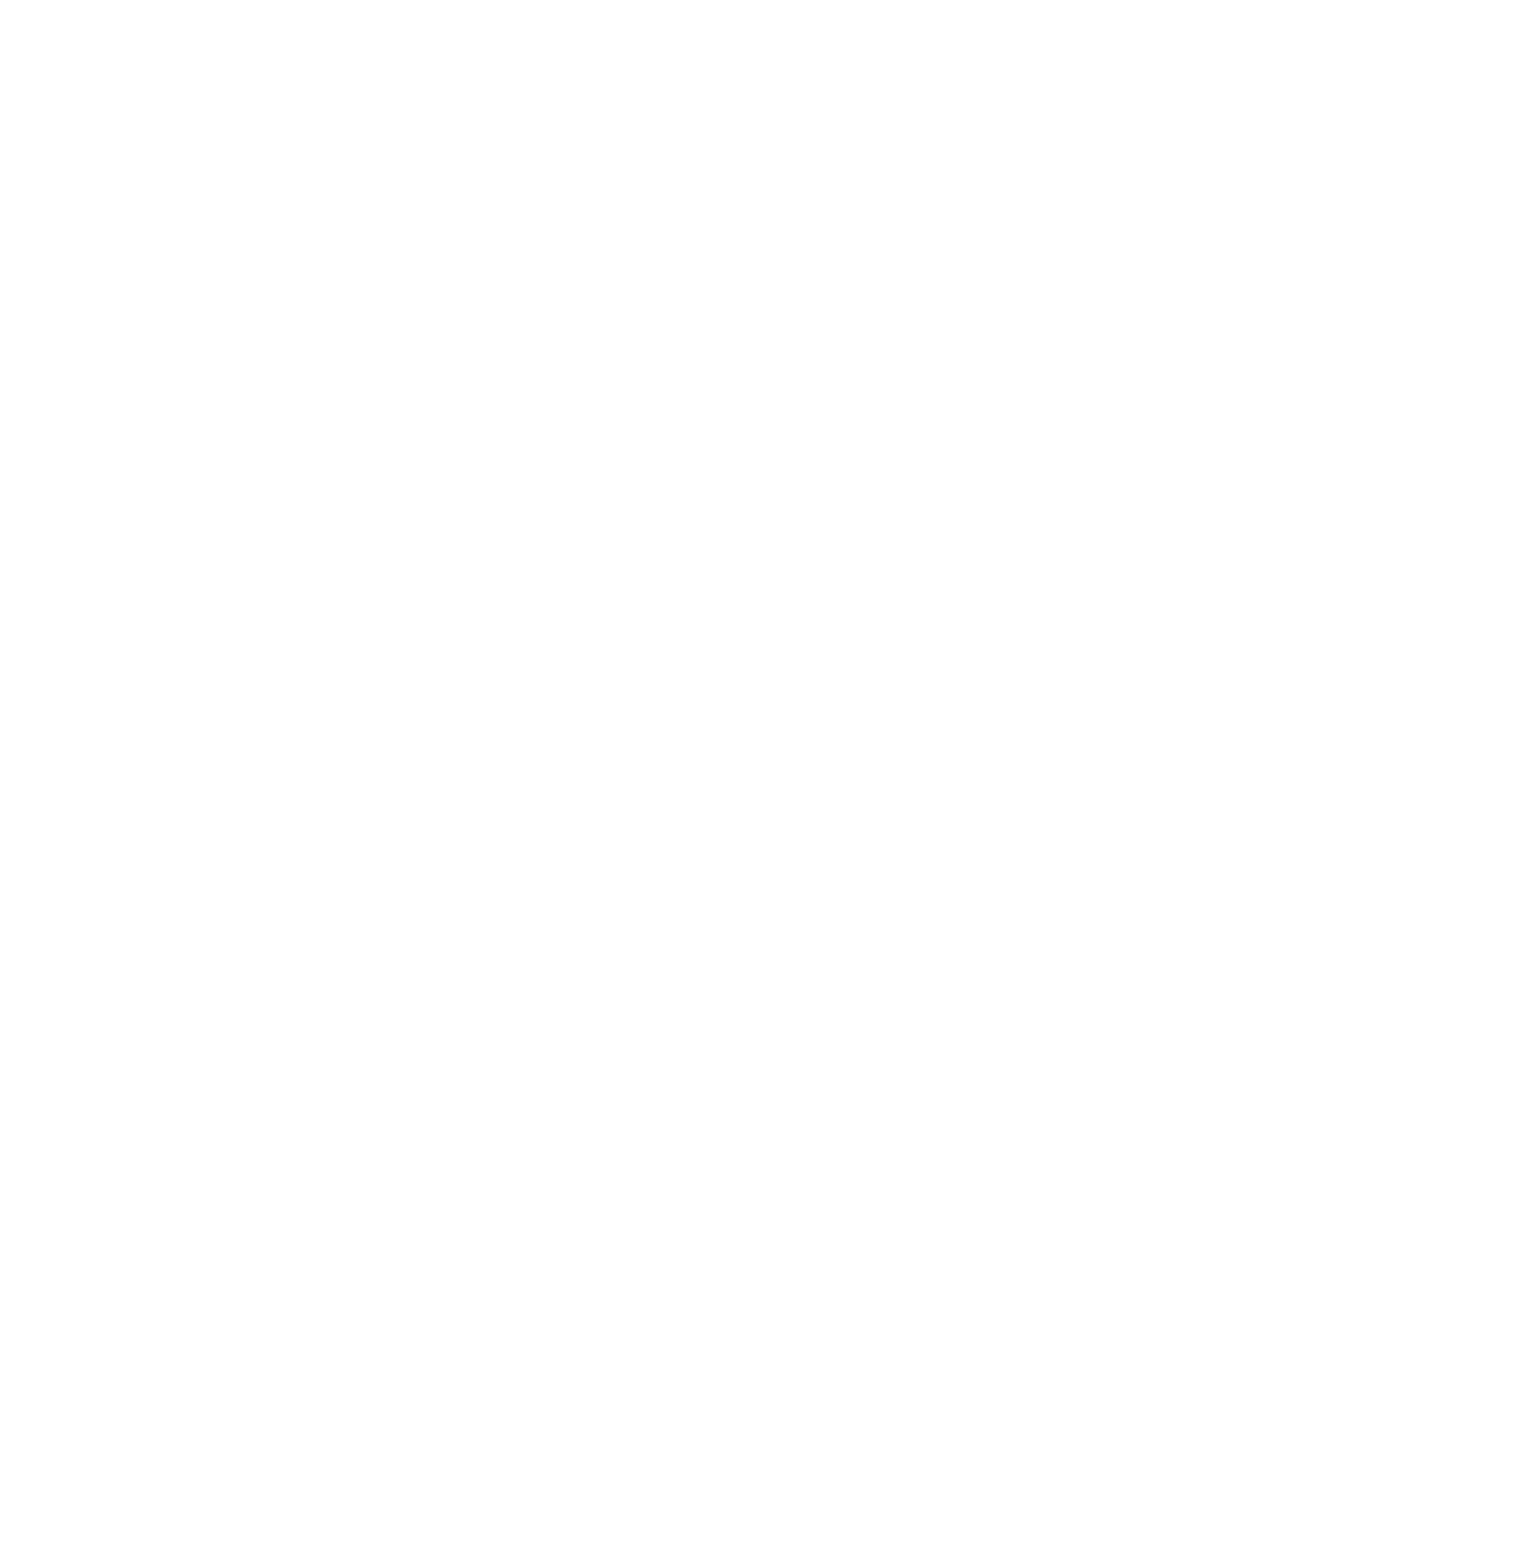 Gamesparcs logo pour fonds sombres (PNG transparent)